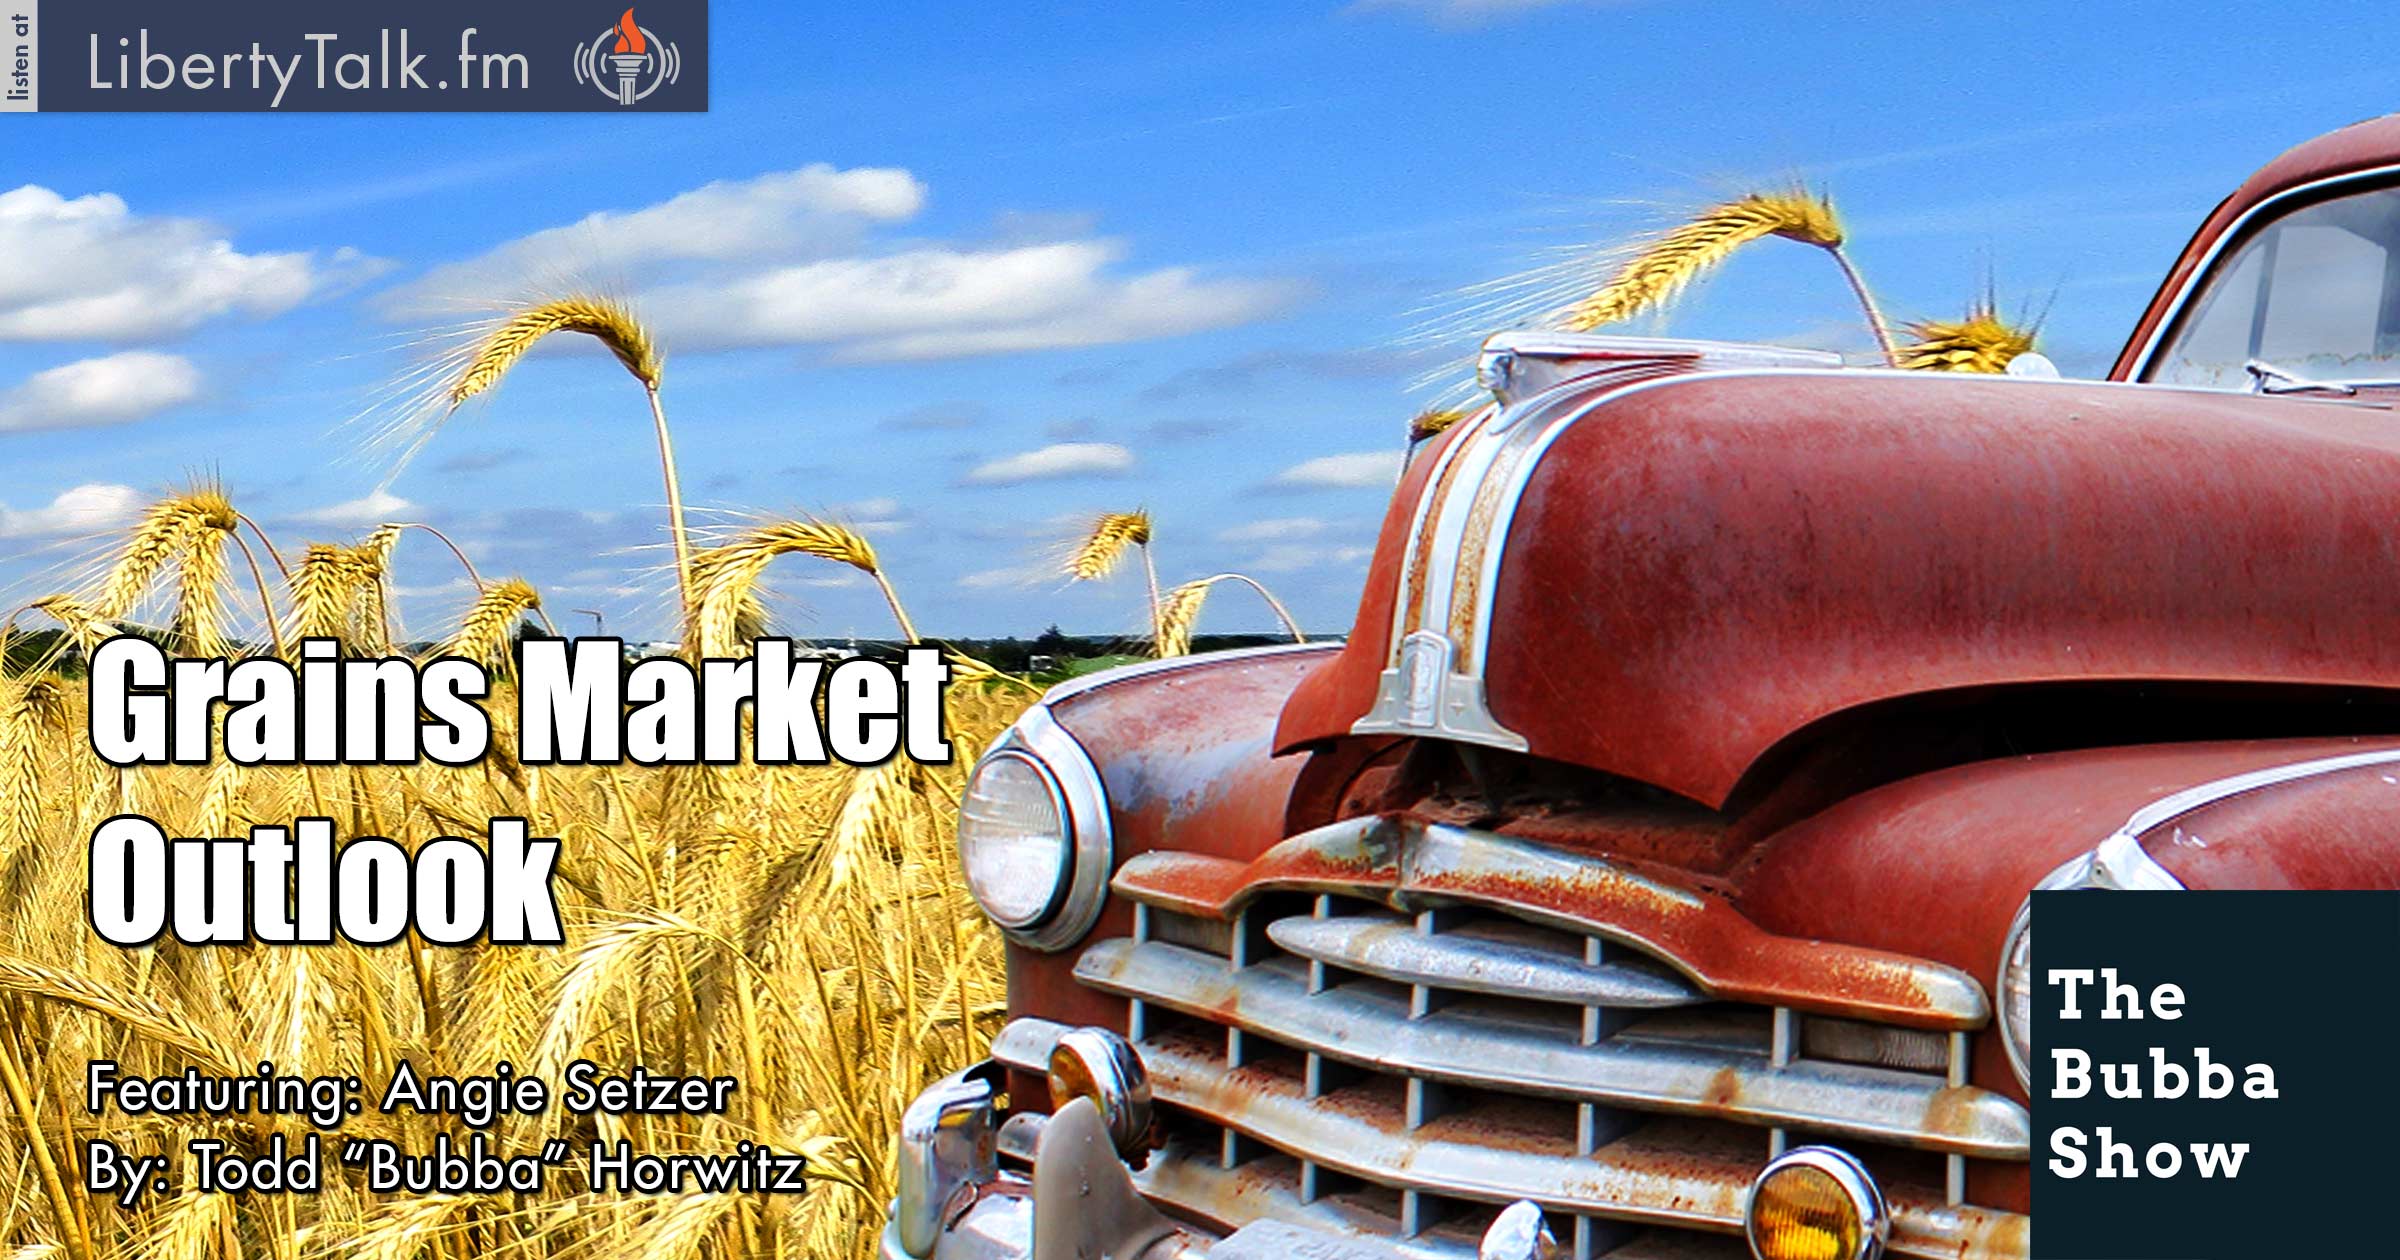 Grains Market Outlook - The Bubba Show